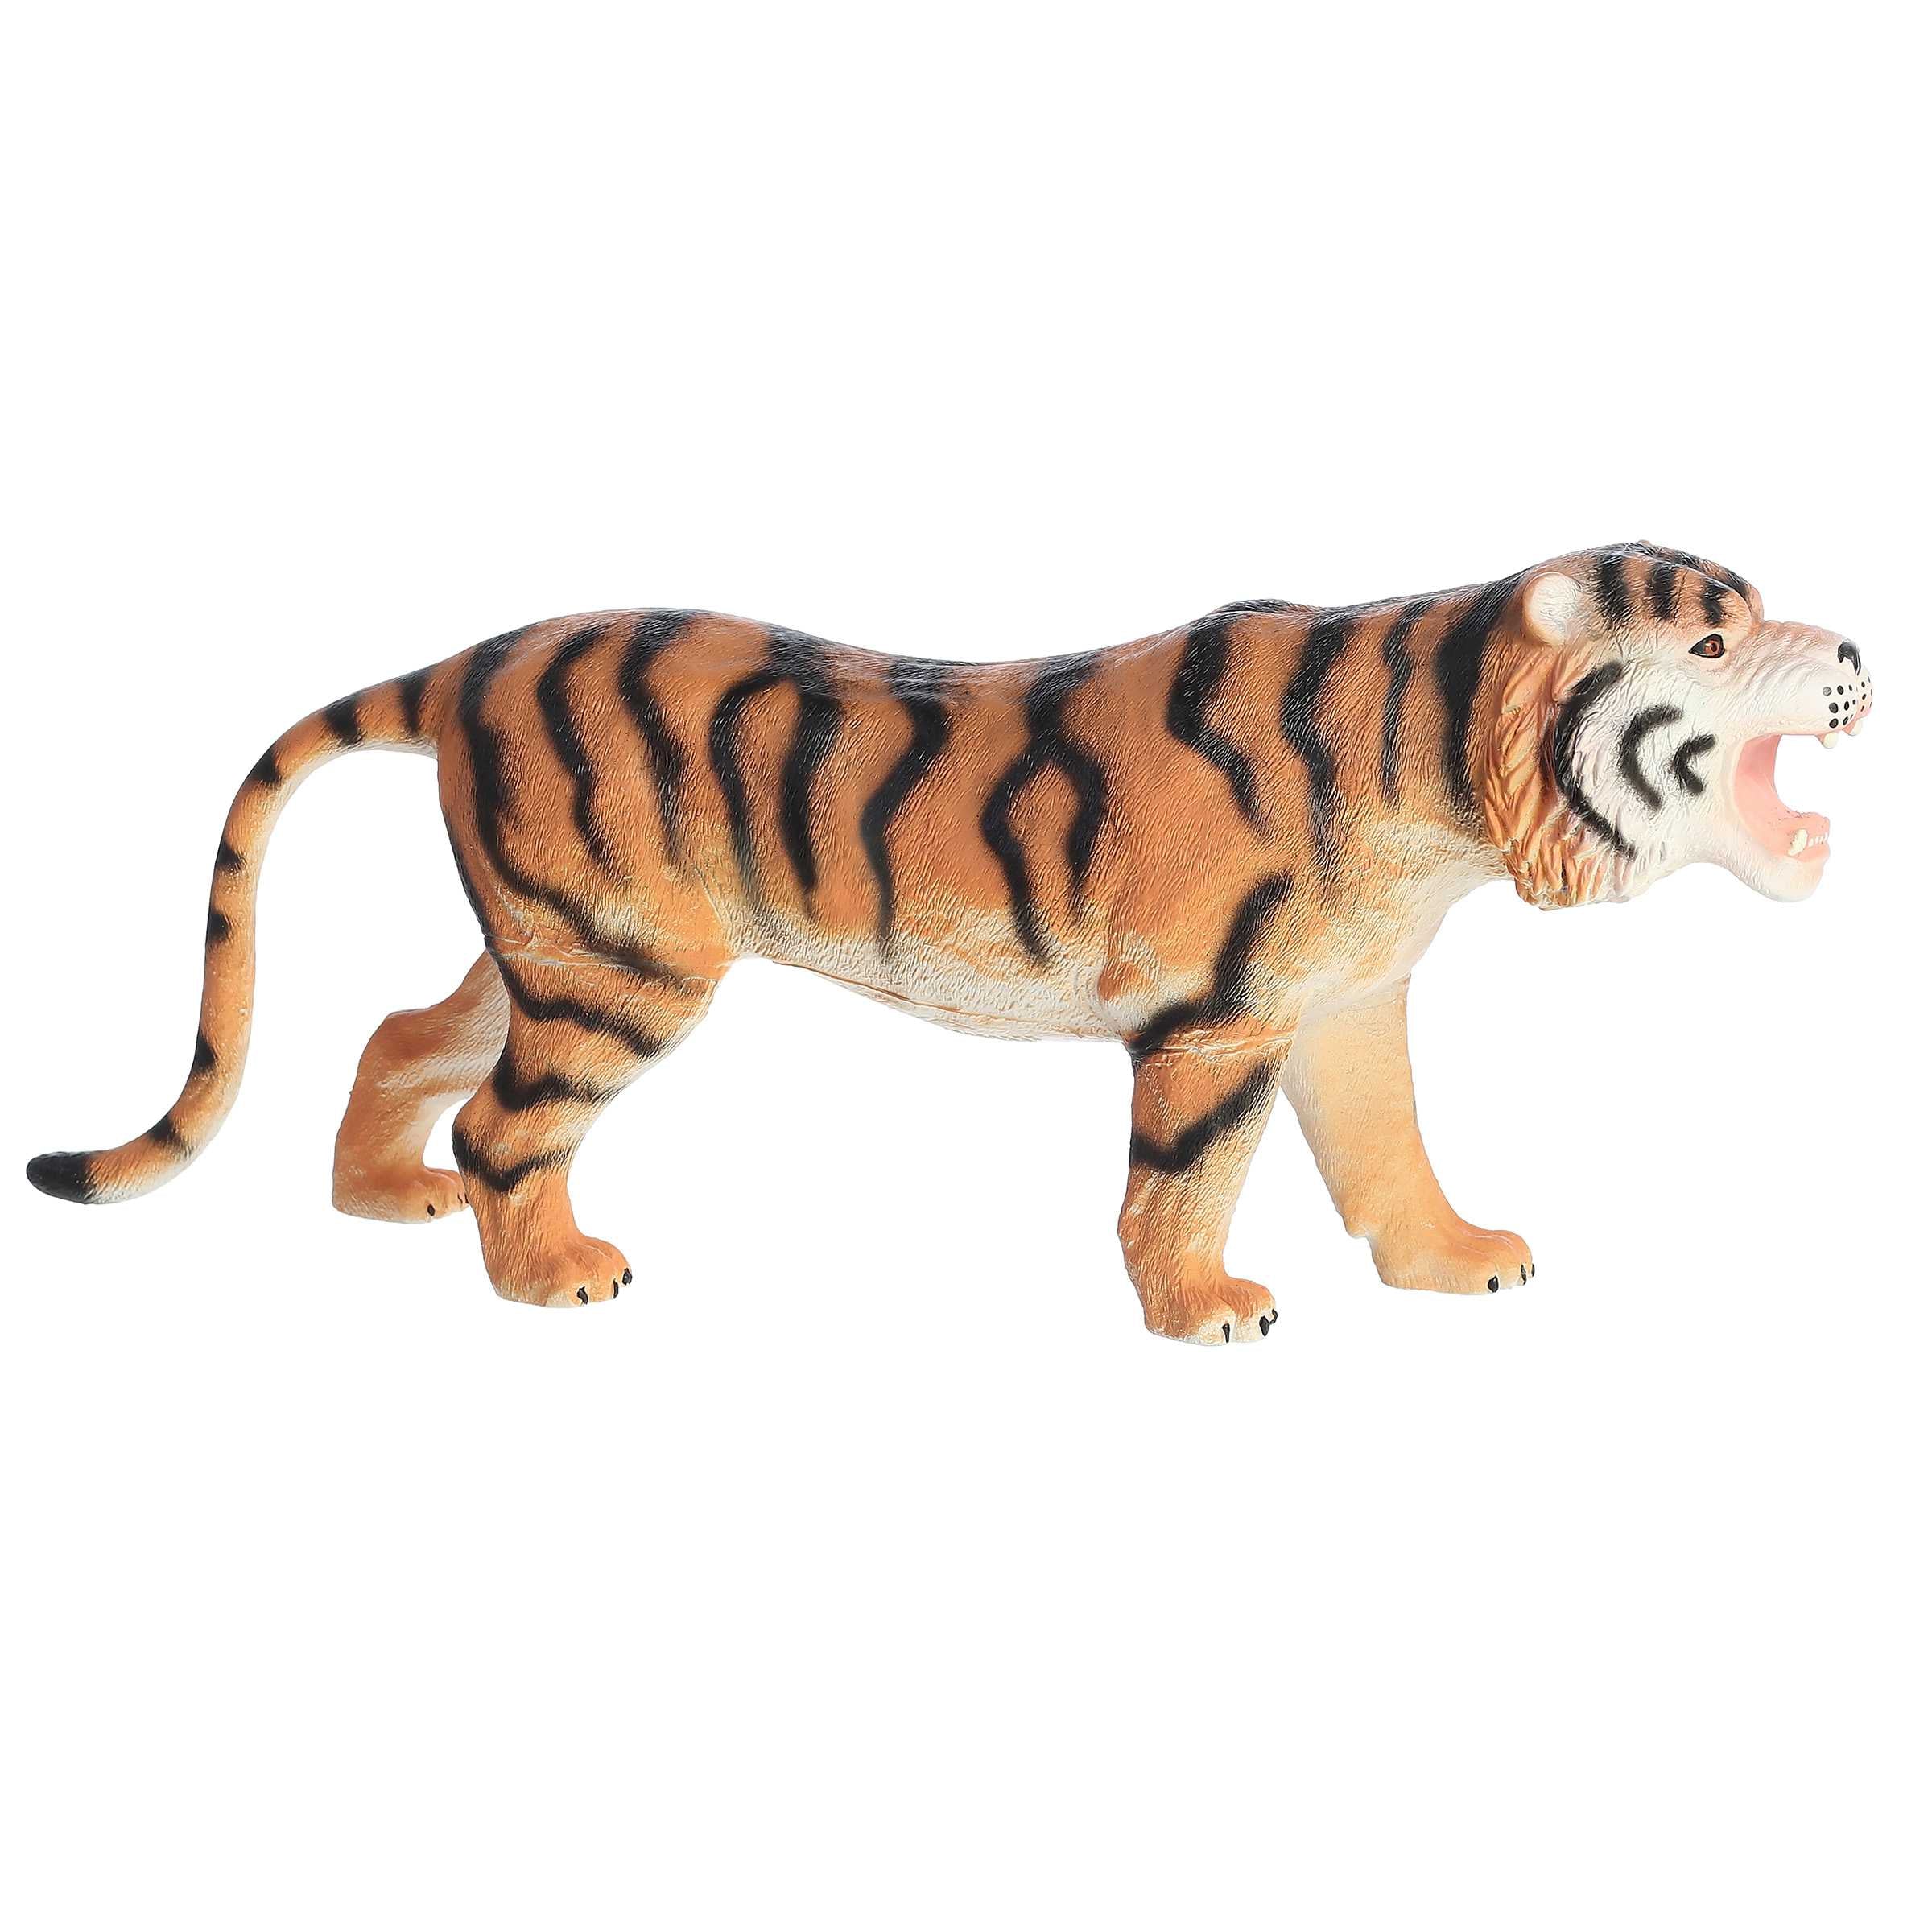 Aurora® Toys - Habitat™ - Tiger Soft Play Figure